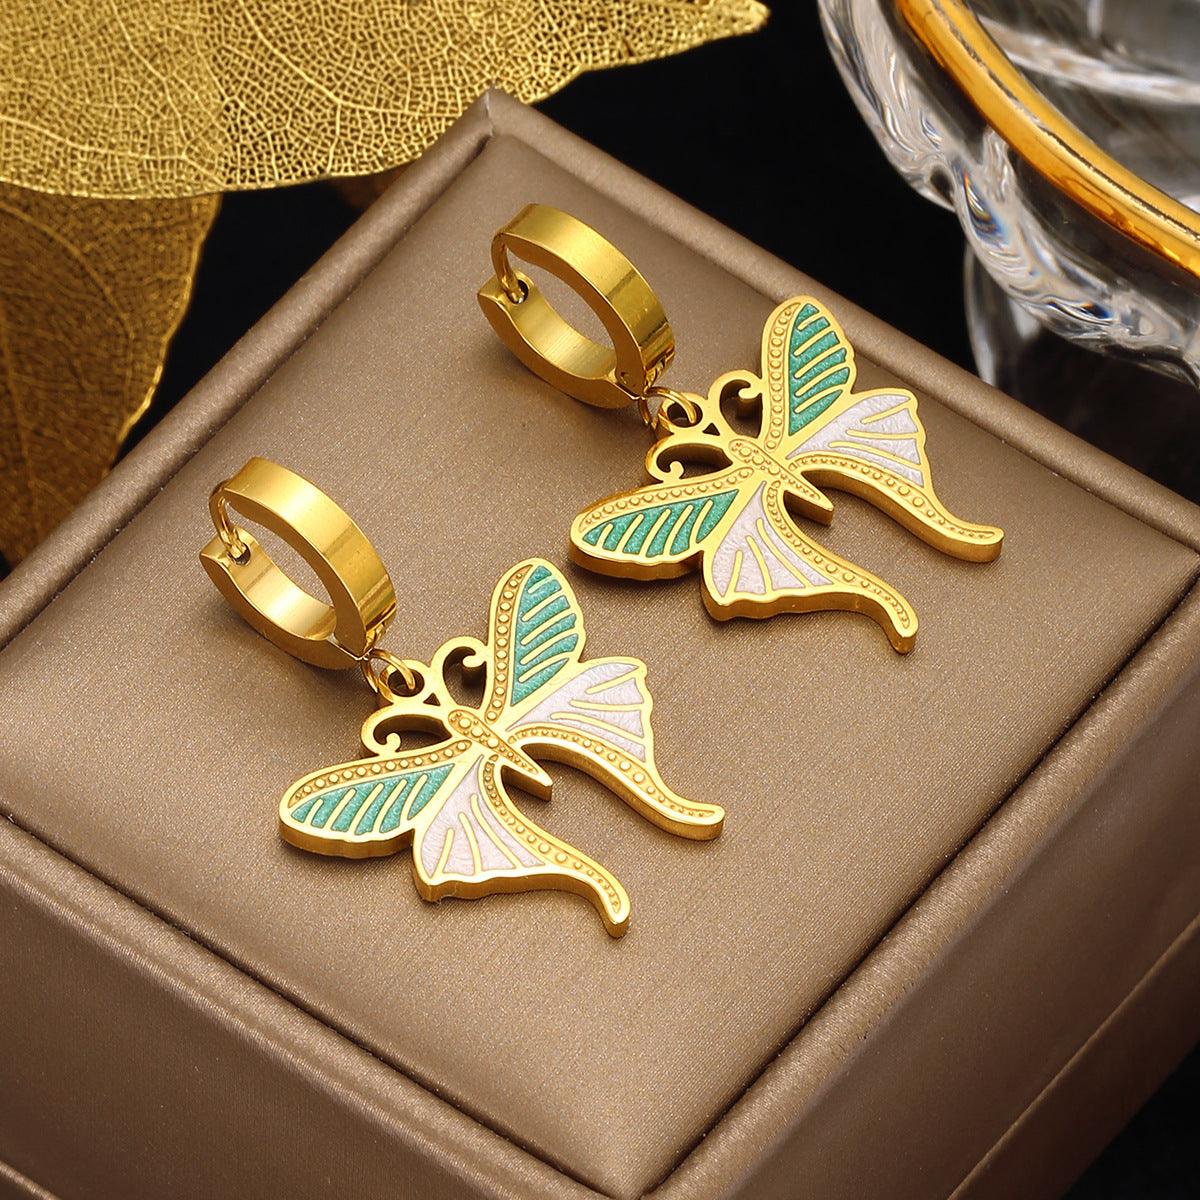 Colorful Oil Necklace Butterfly Earrings High Sense Temperamental Fashionmonger Diamond Ear Hanging - Nioor